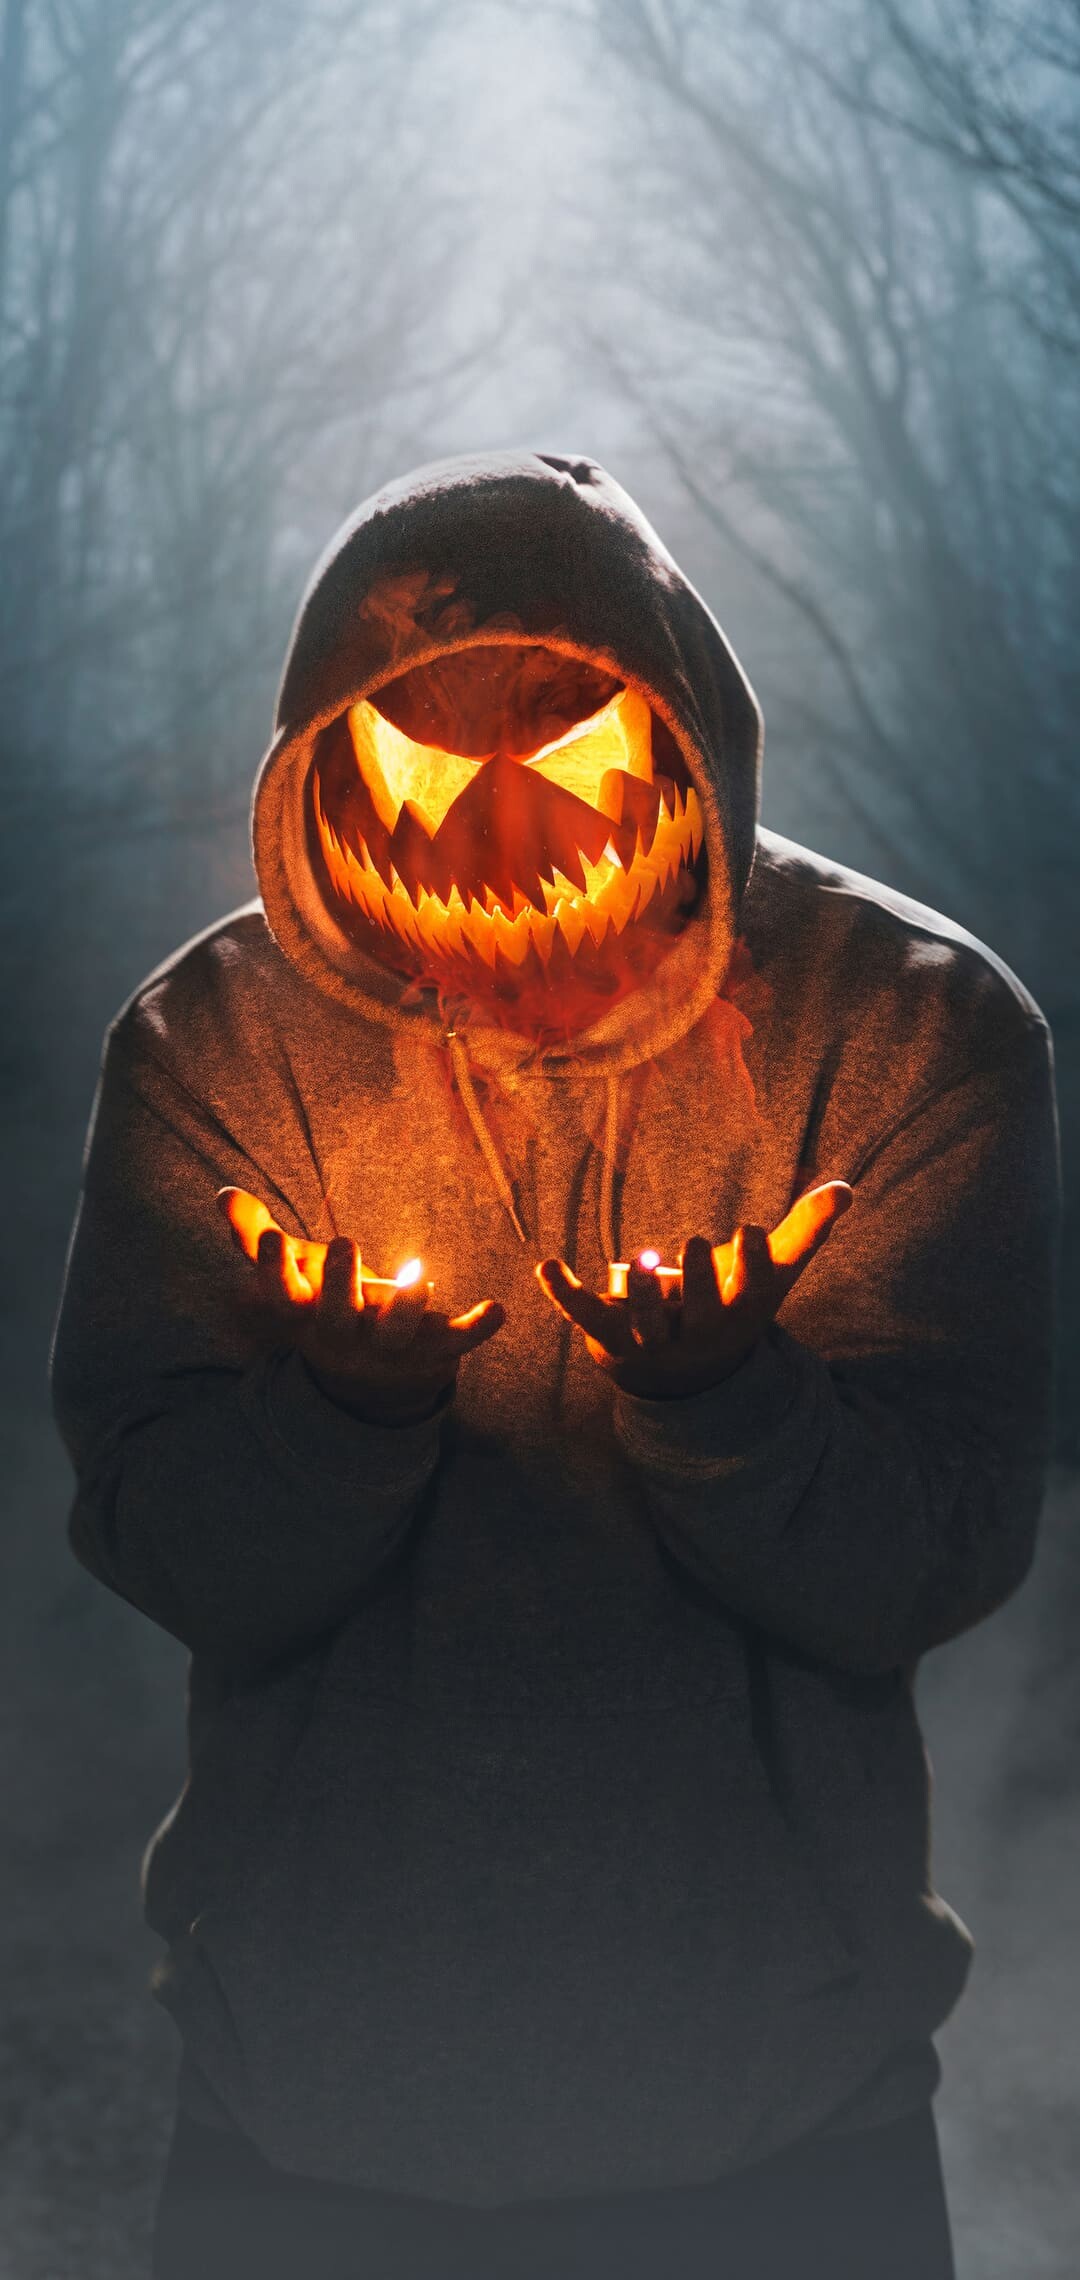 Halloween: All Hallows Eve, Spooky mask, Jack-o'-lantern. 1080x2280 HD Wallpaper.